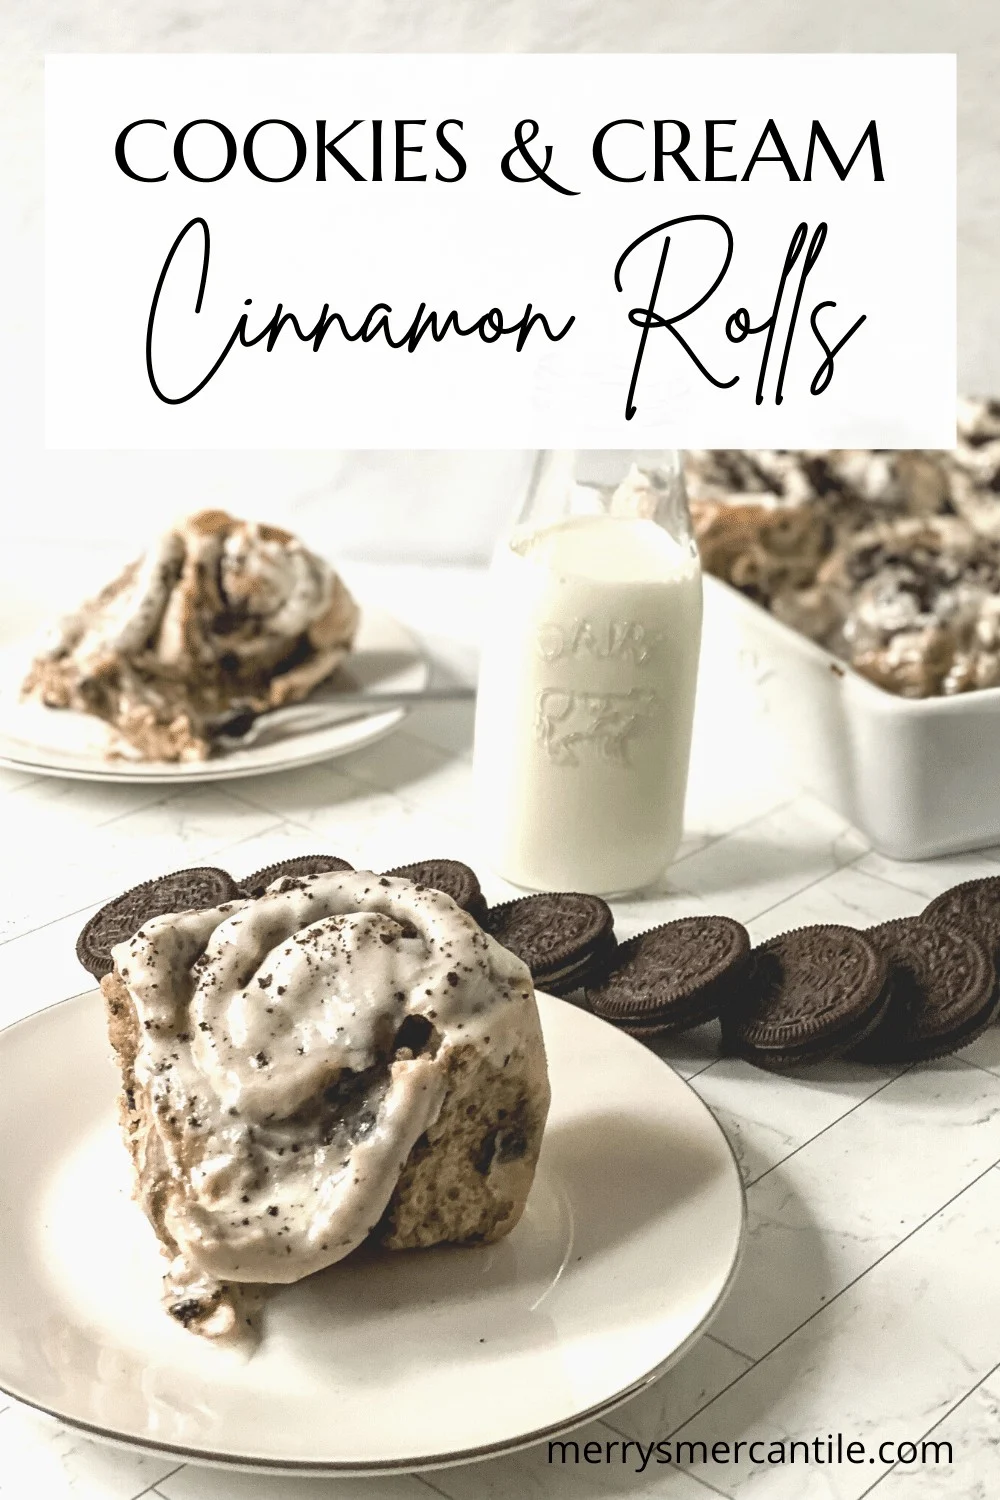 Cookies and cream cinnamon rolls